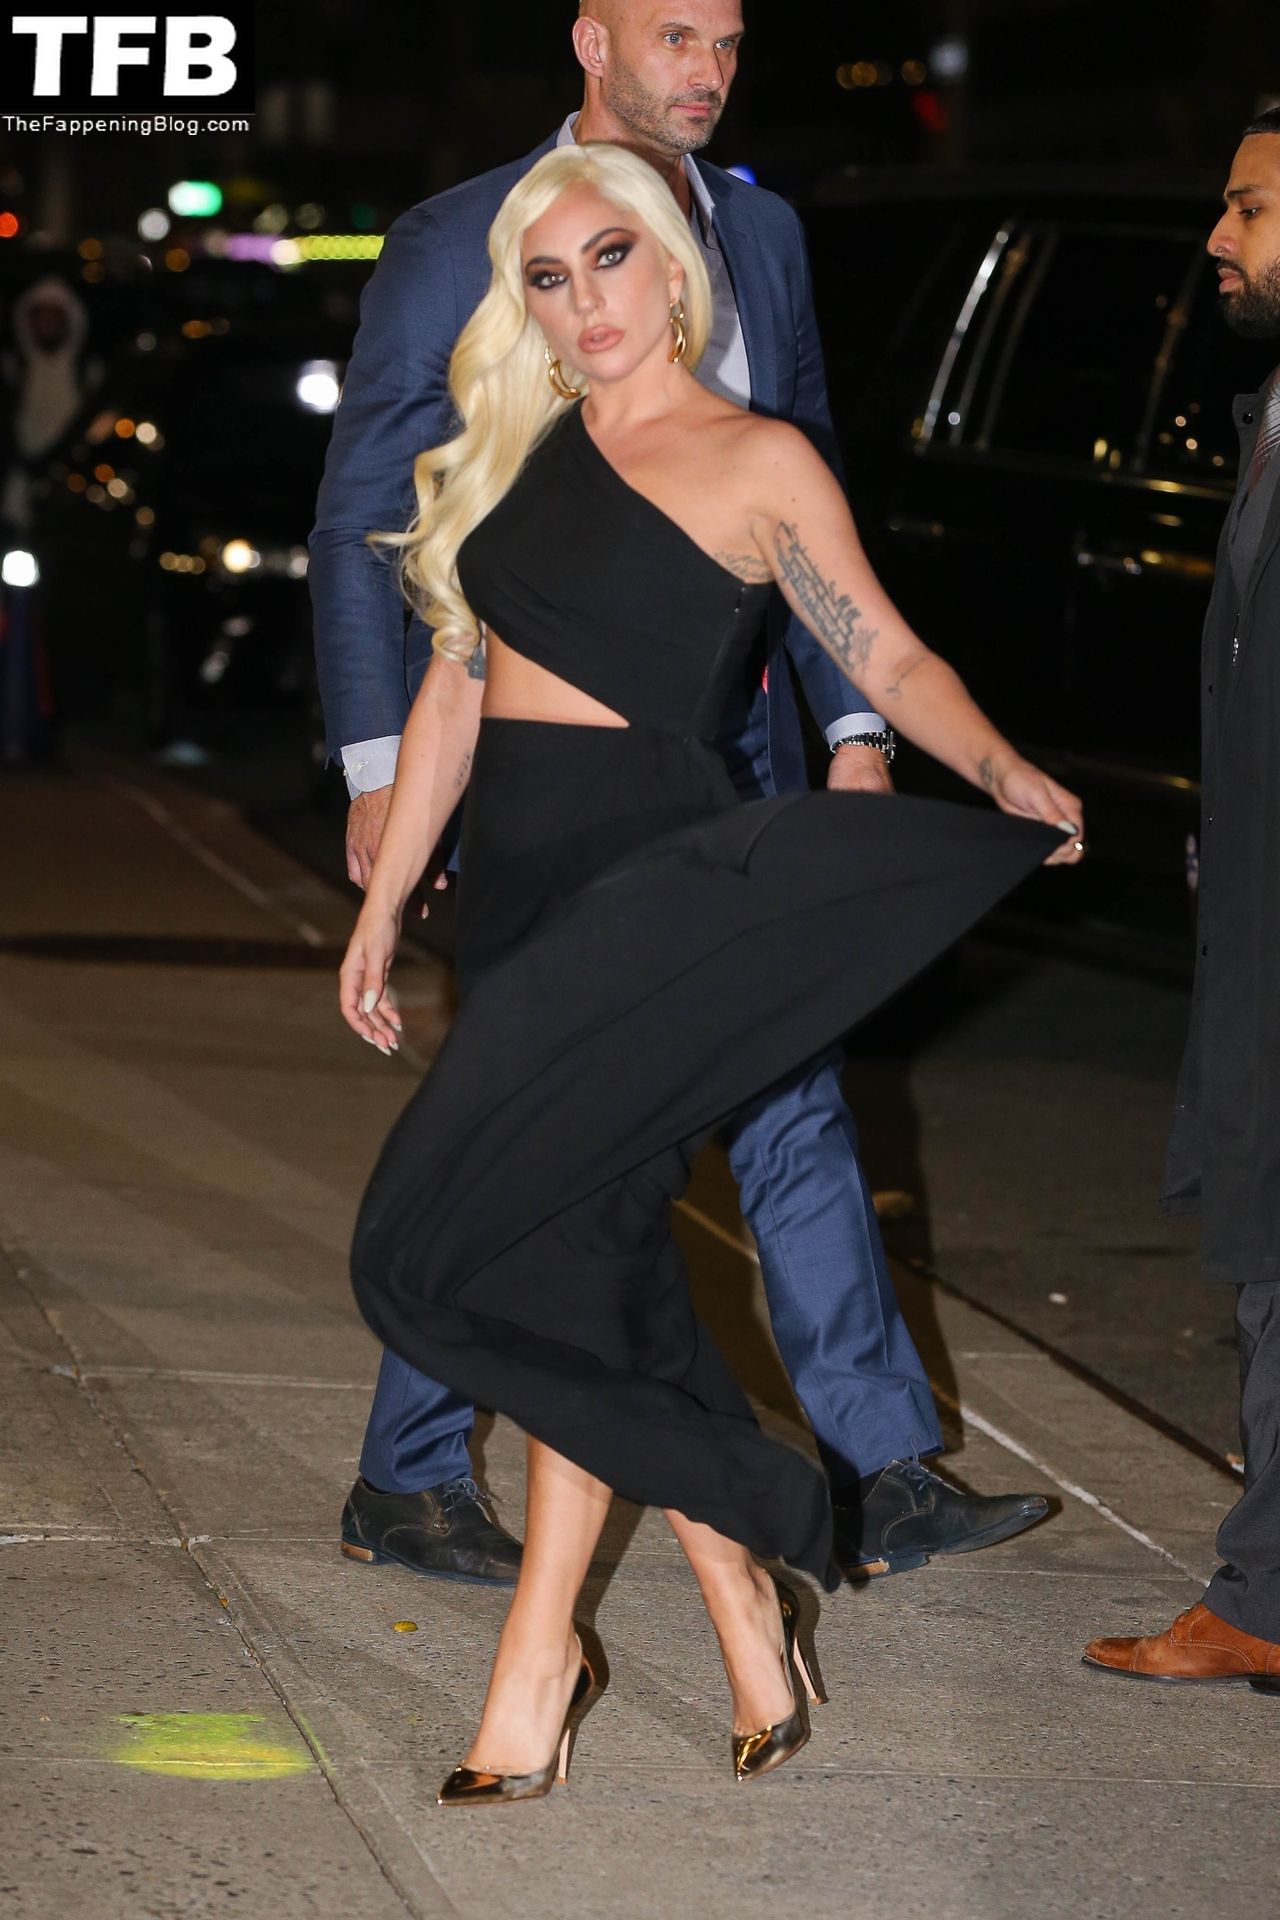 Lady-Gaga-Sexy-The-Fappening-Blog-26-1.jpg